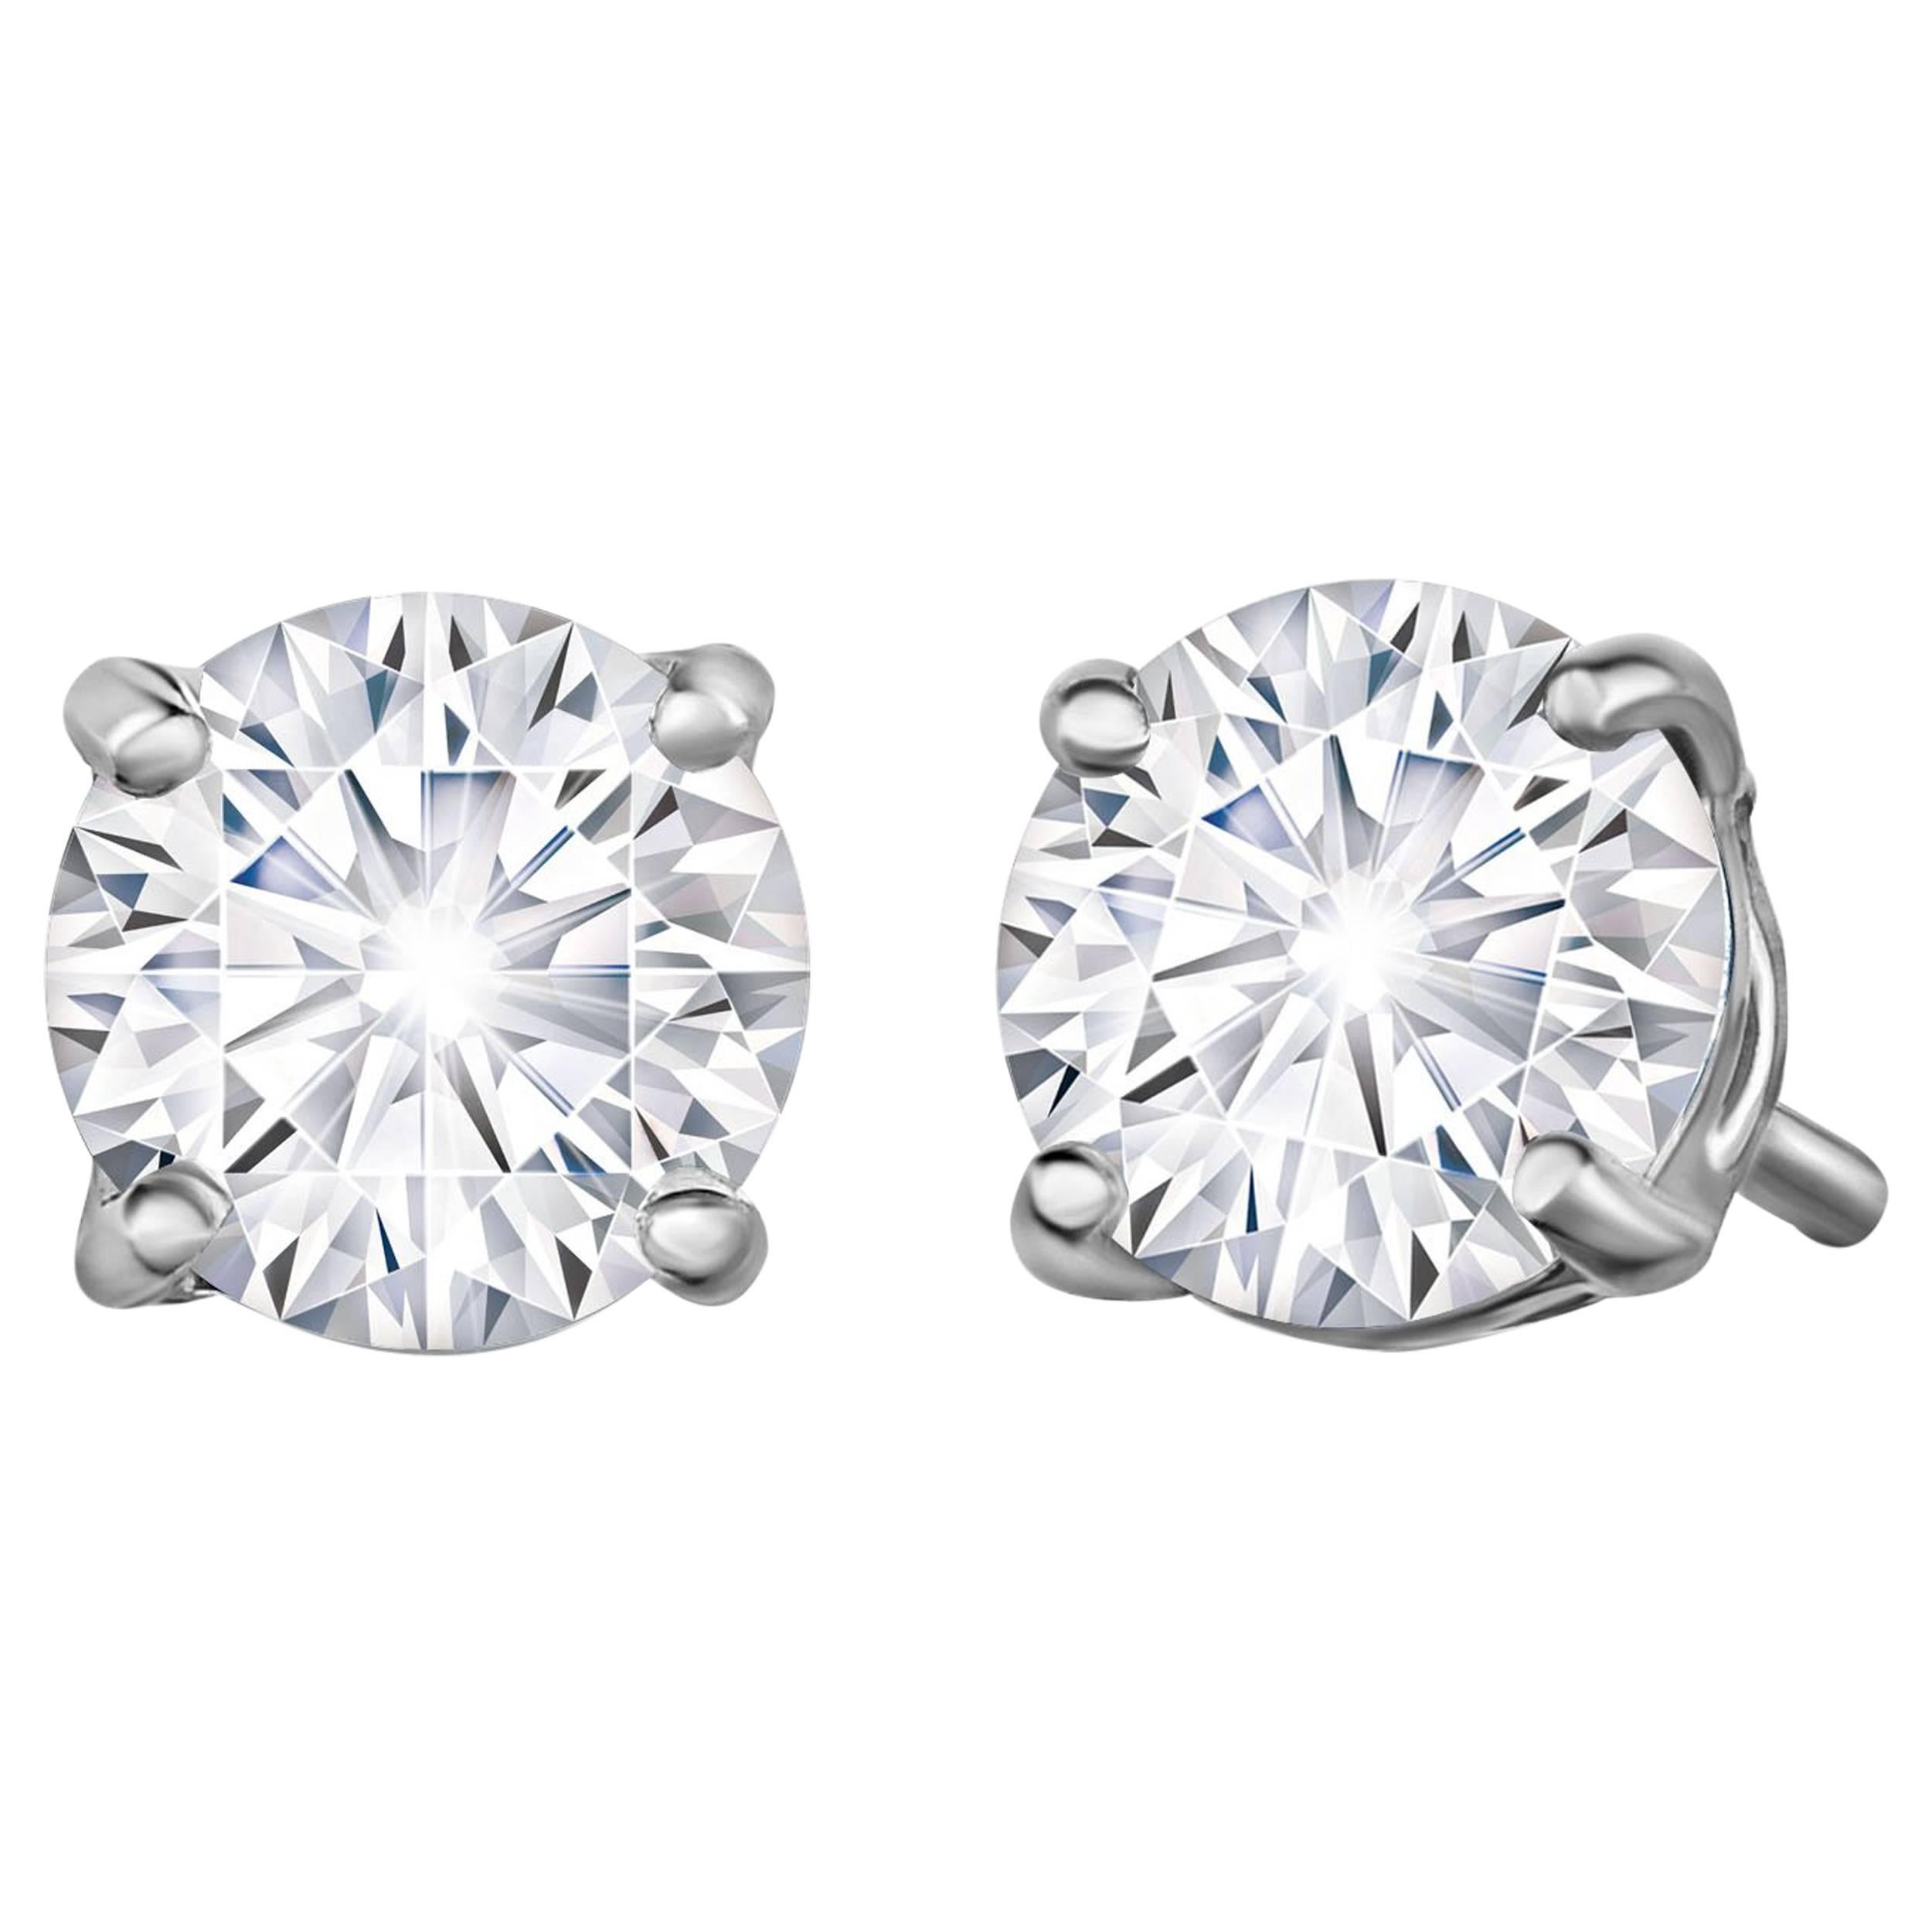 Marisa Perry 70 Points Forevermark Diamond Stud Earrings